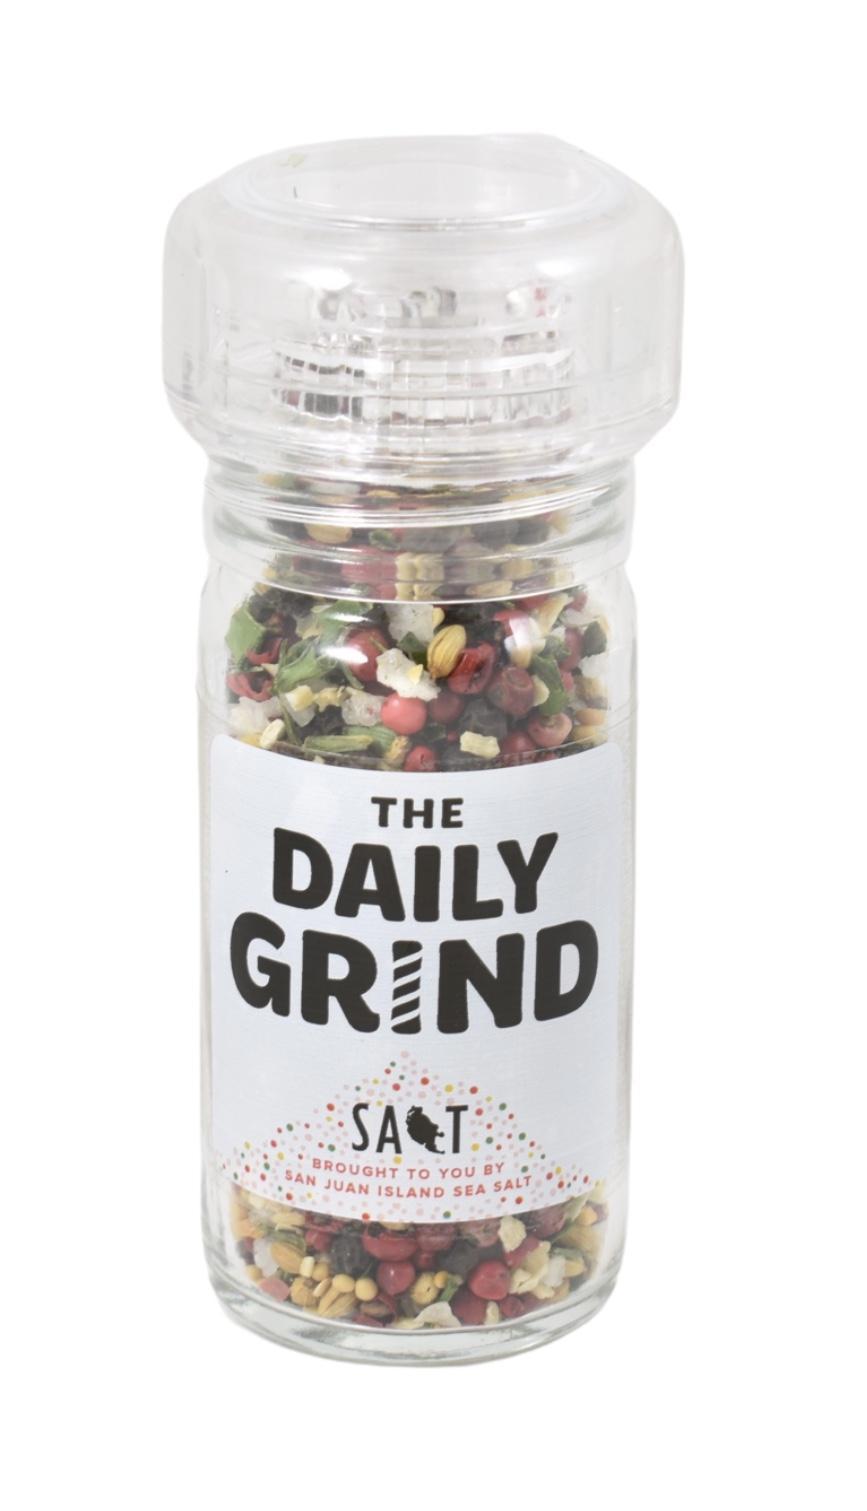 San Juan Island Sea Salt - The Daily Grind 1.4oz